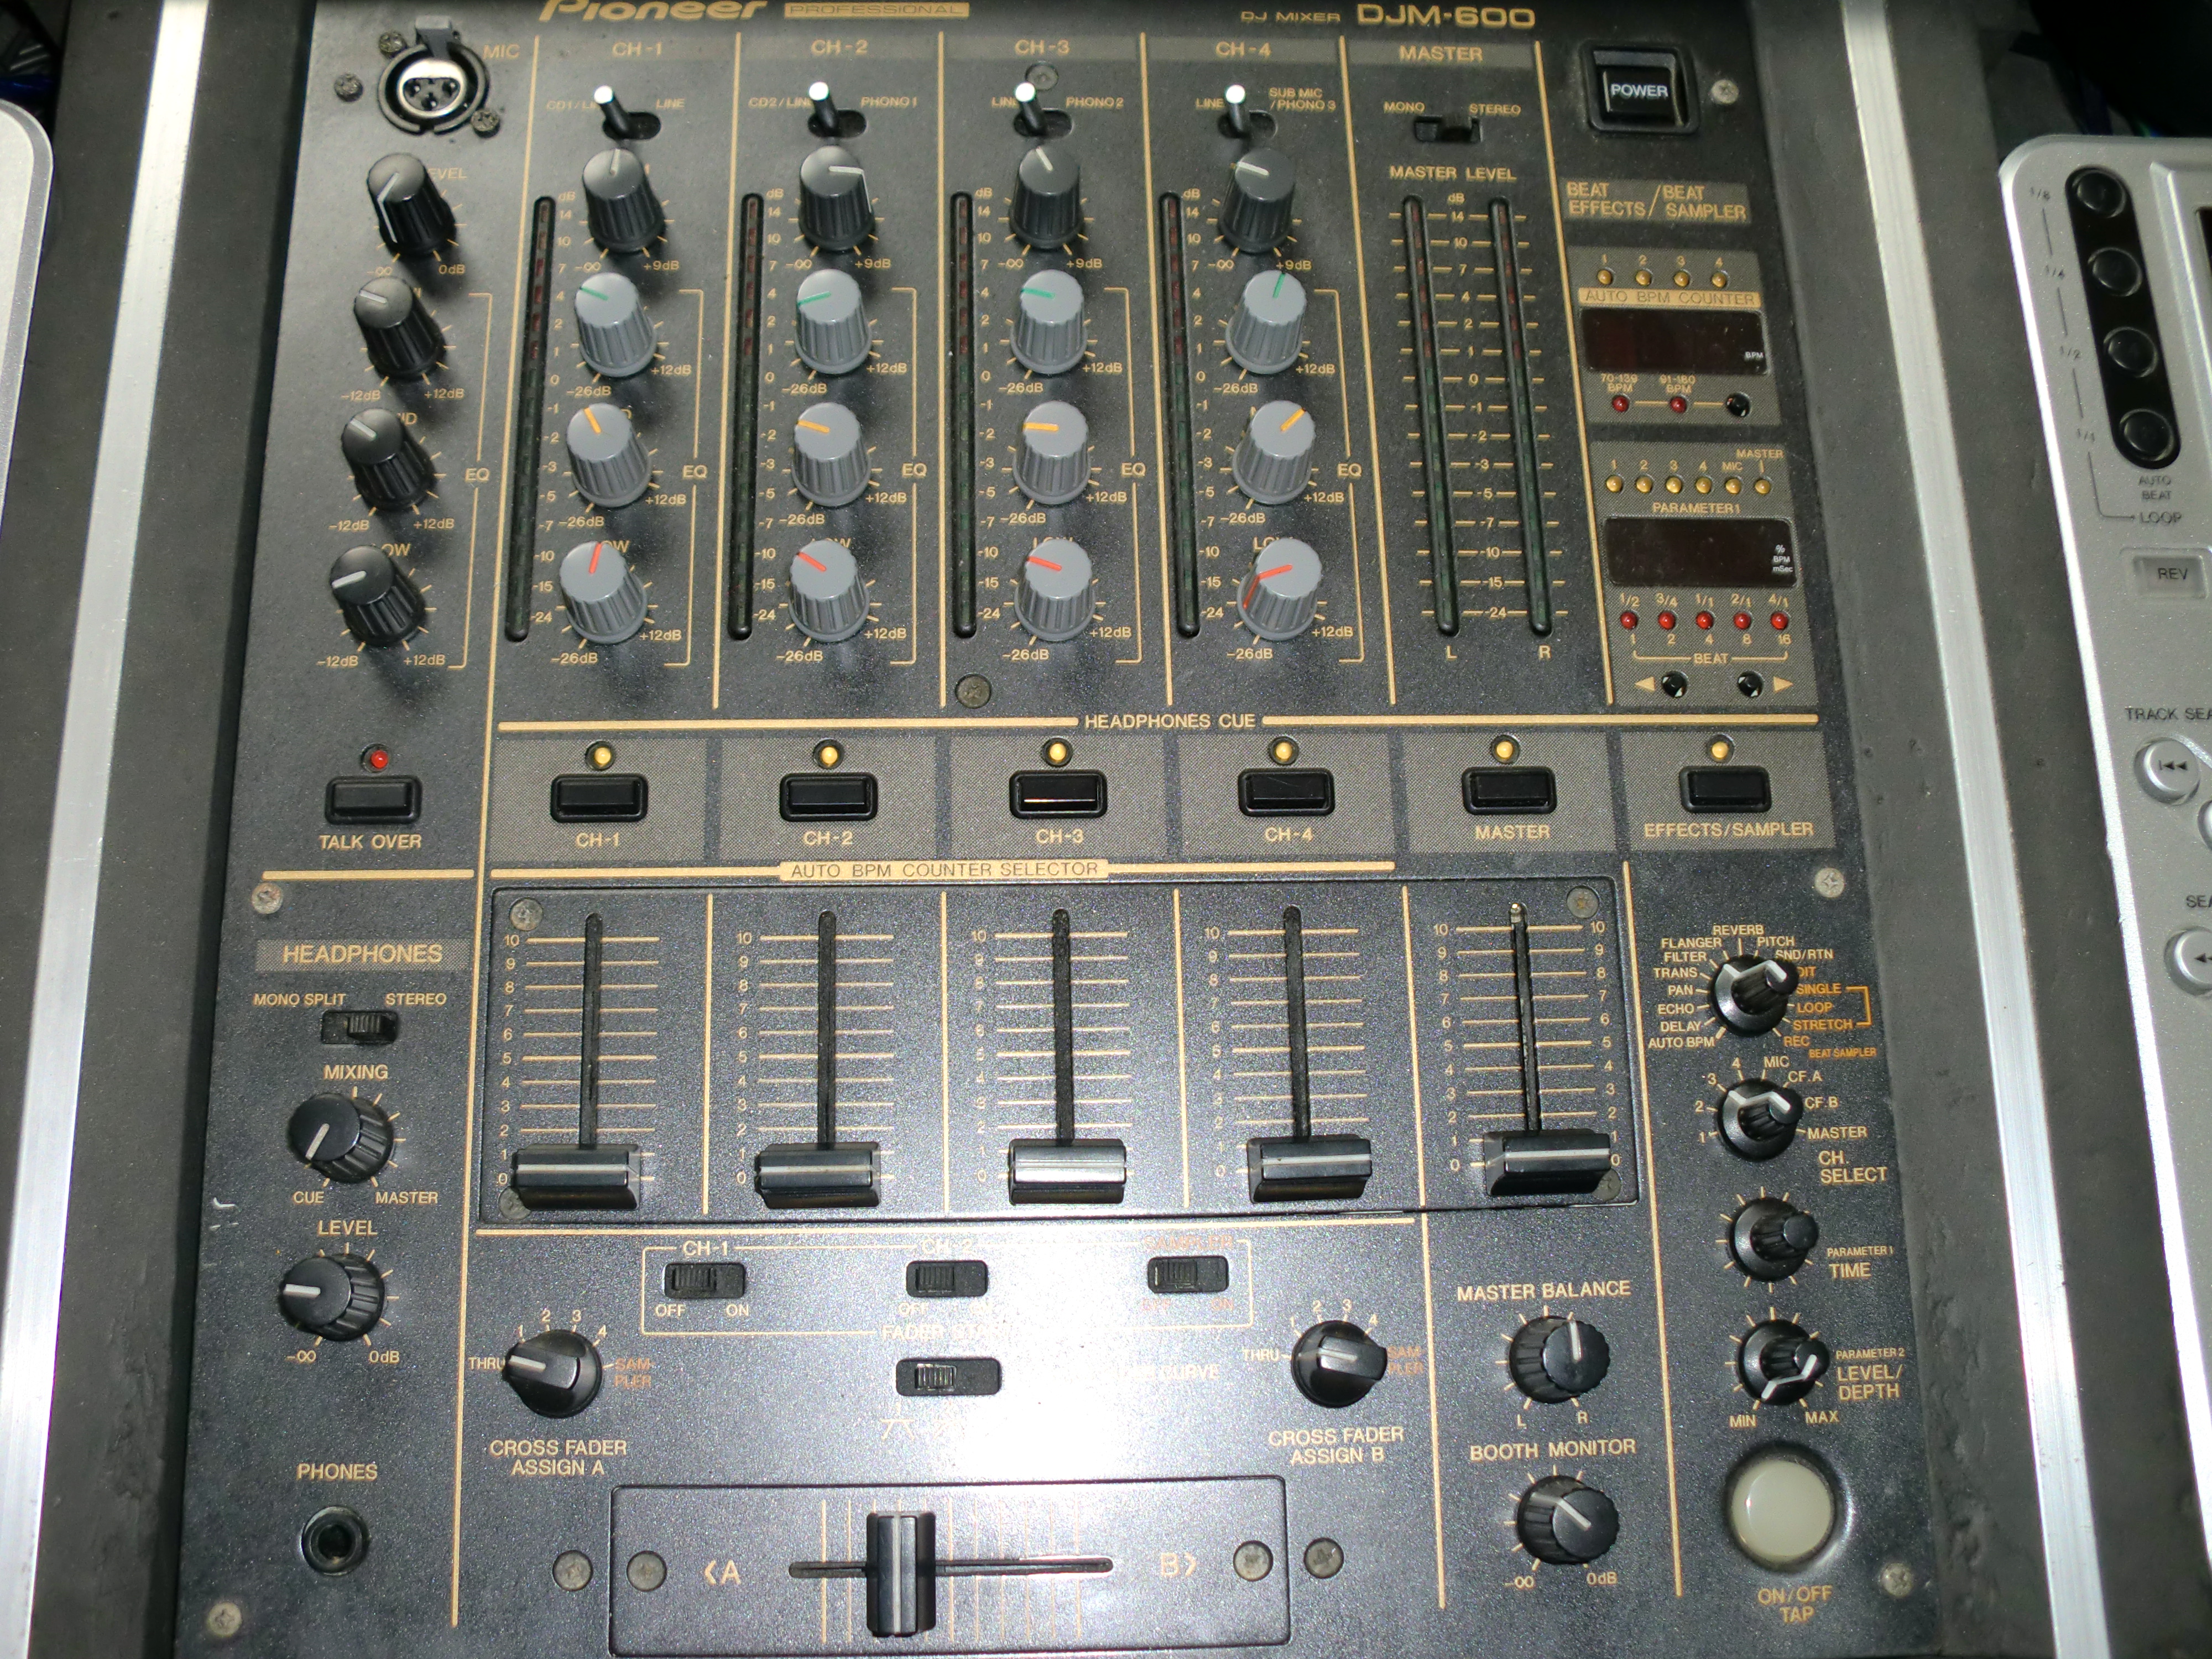 Pioneer DJM-600 image (#564522) - Audiofanzine